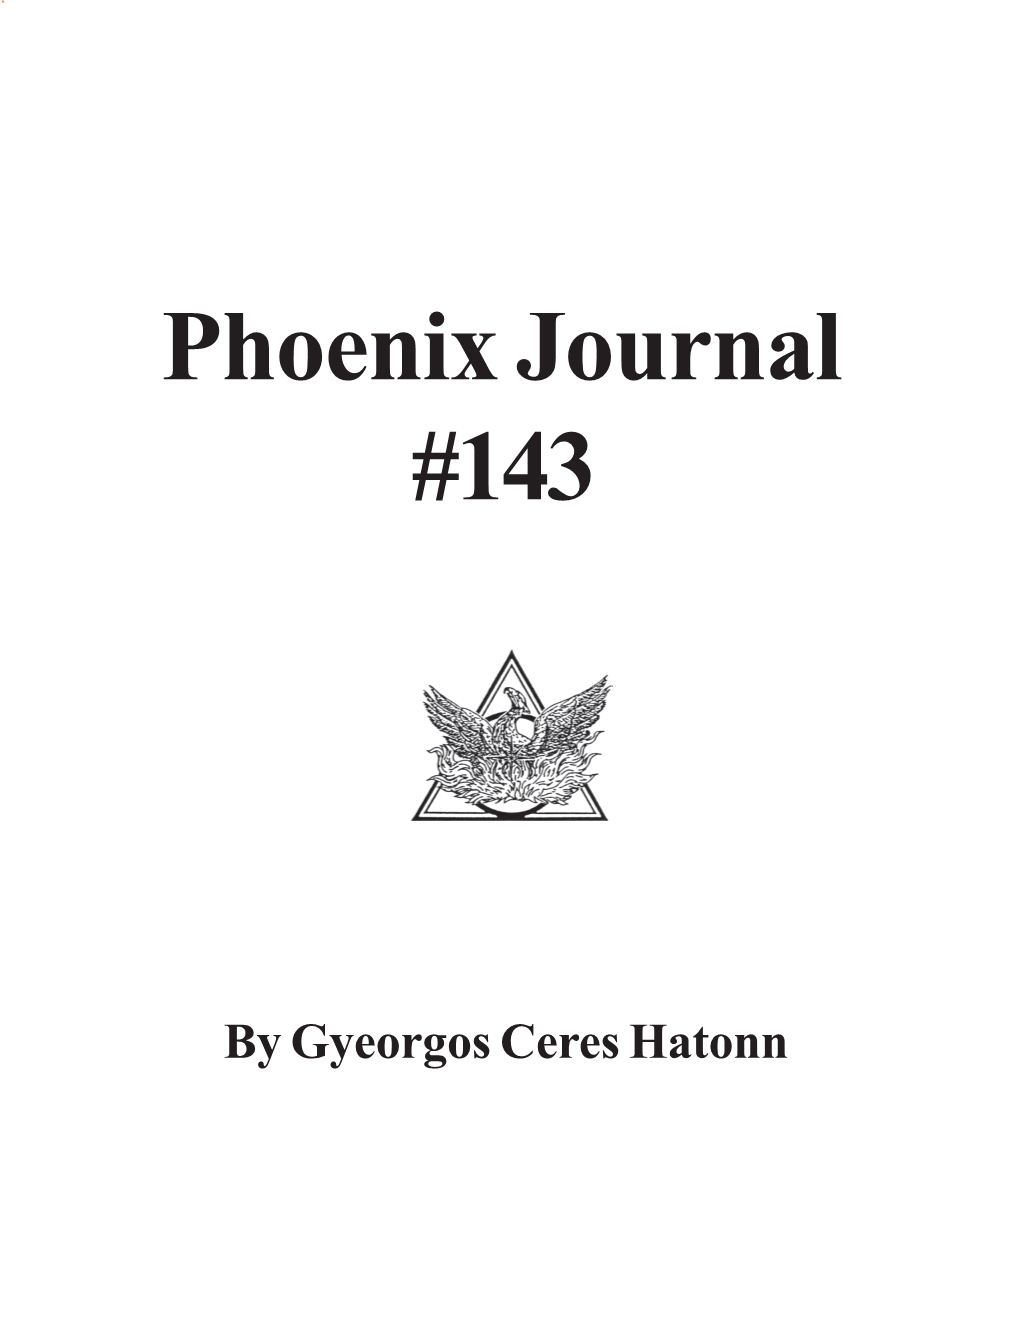 Phoenix Journal #143